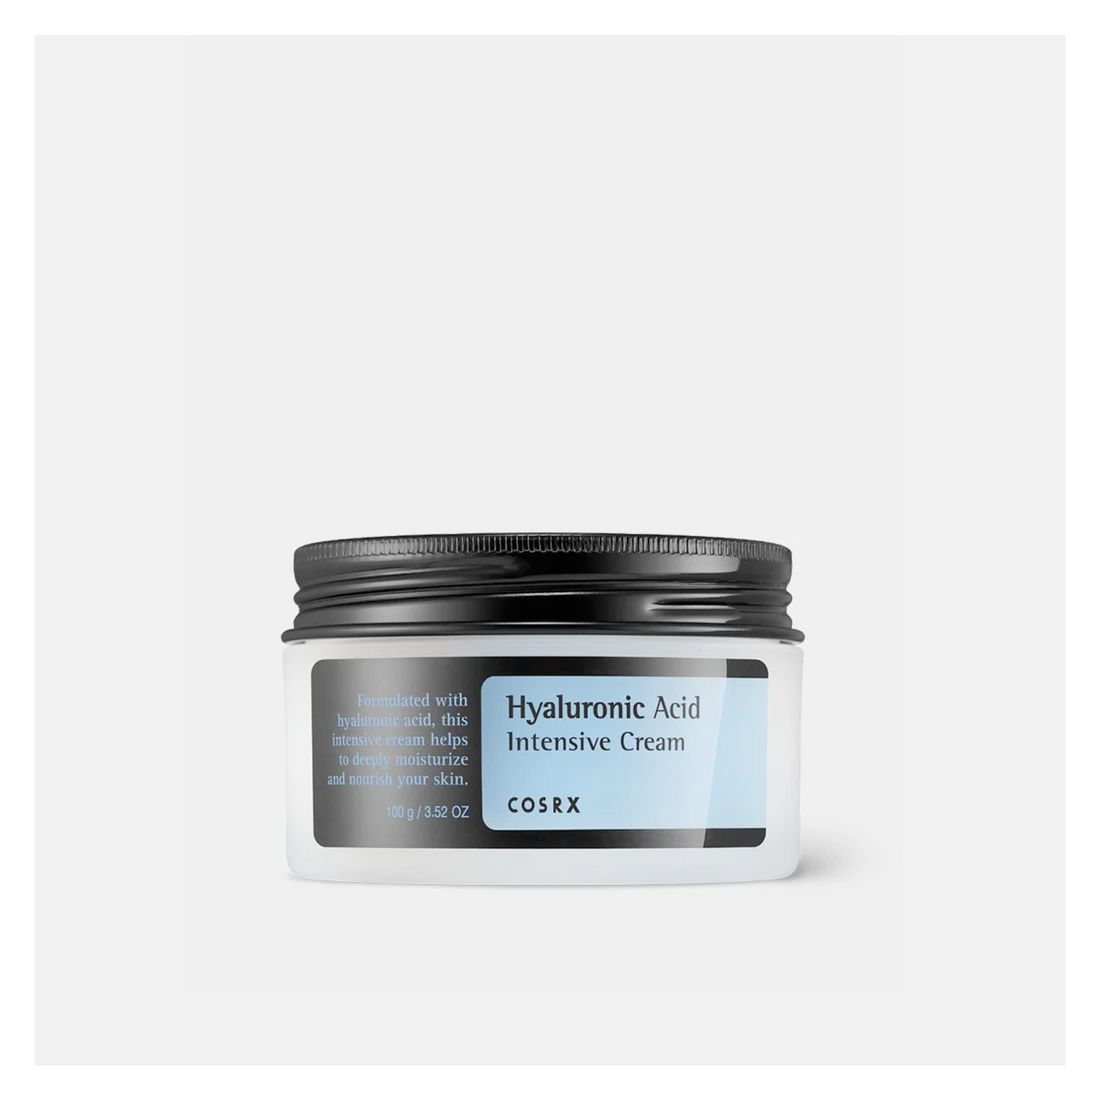 COSRX Hyaluronic Acid Intensive Cream, 100g